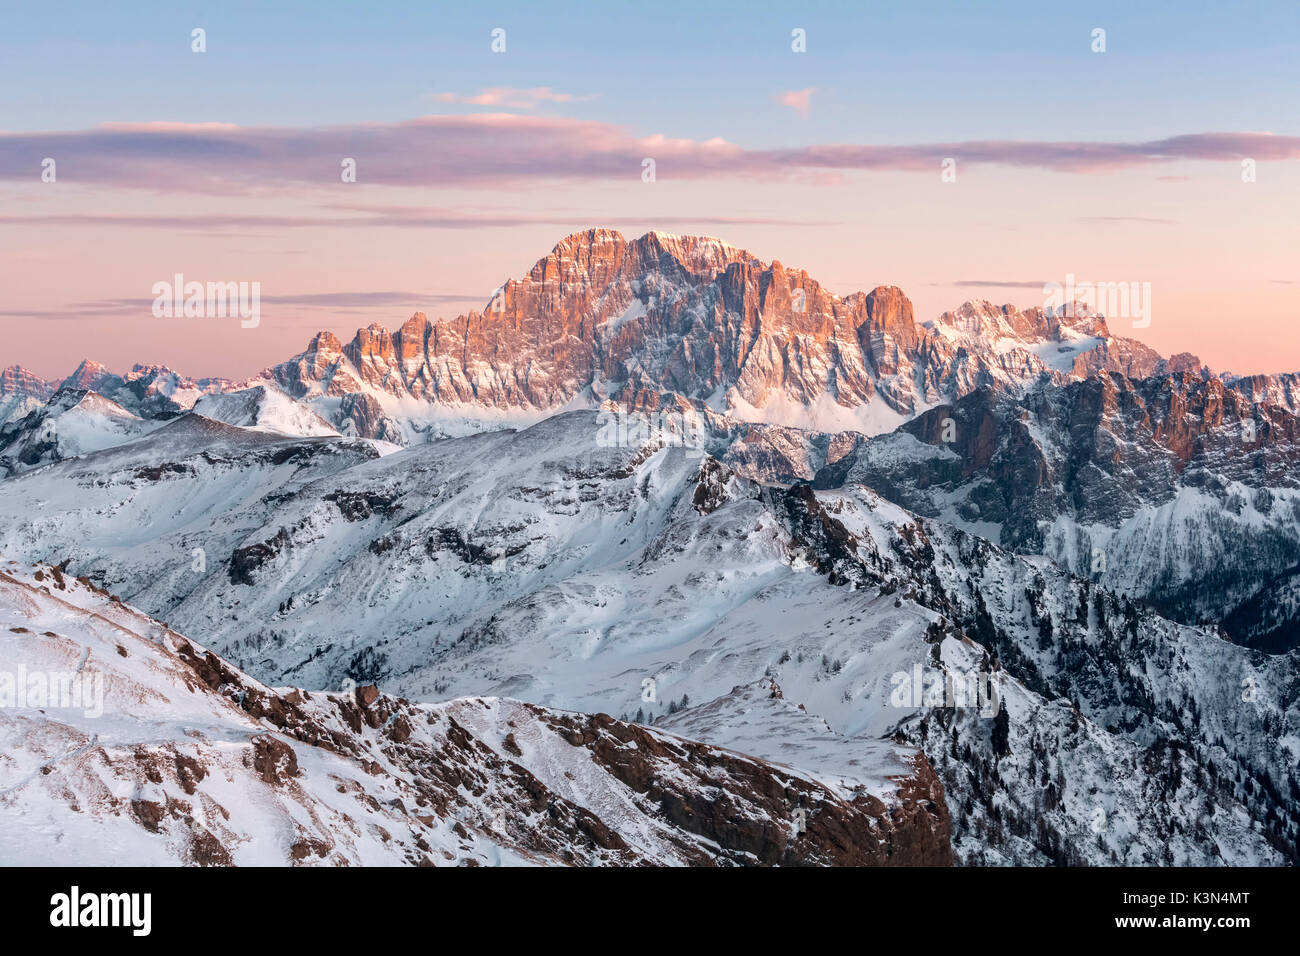 Europa, Italien, Venetien, Belluno. Den Berg Civetta im Winter Sonnenuntergang, Dolomiten Stockfoto